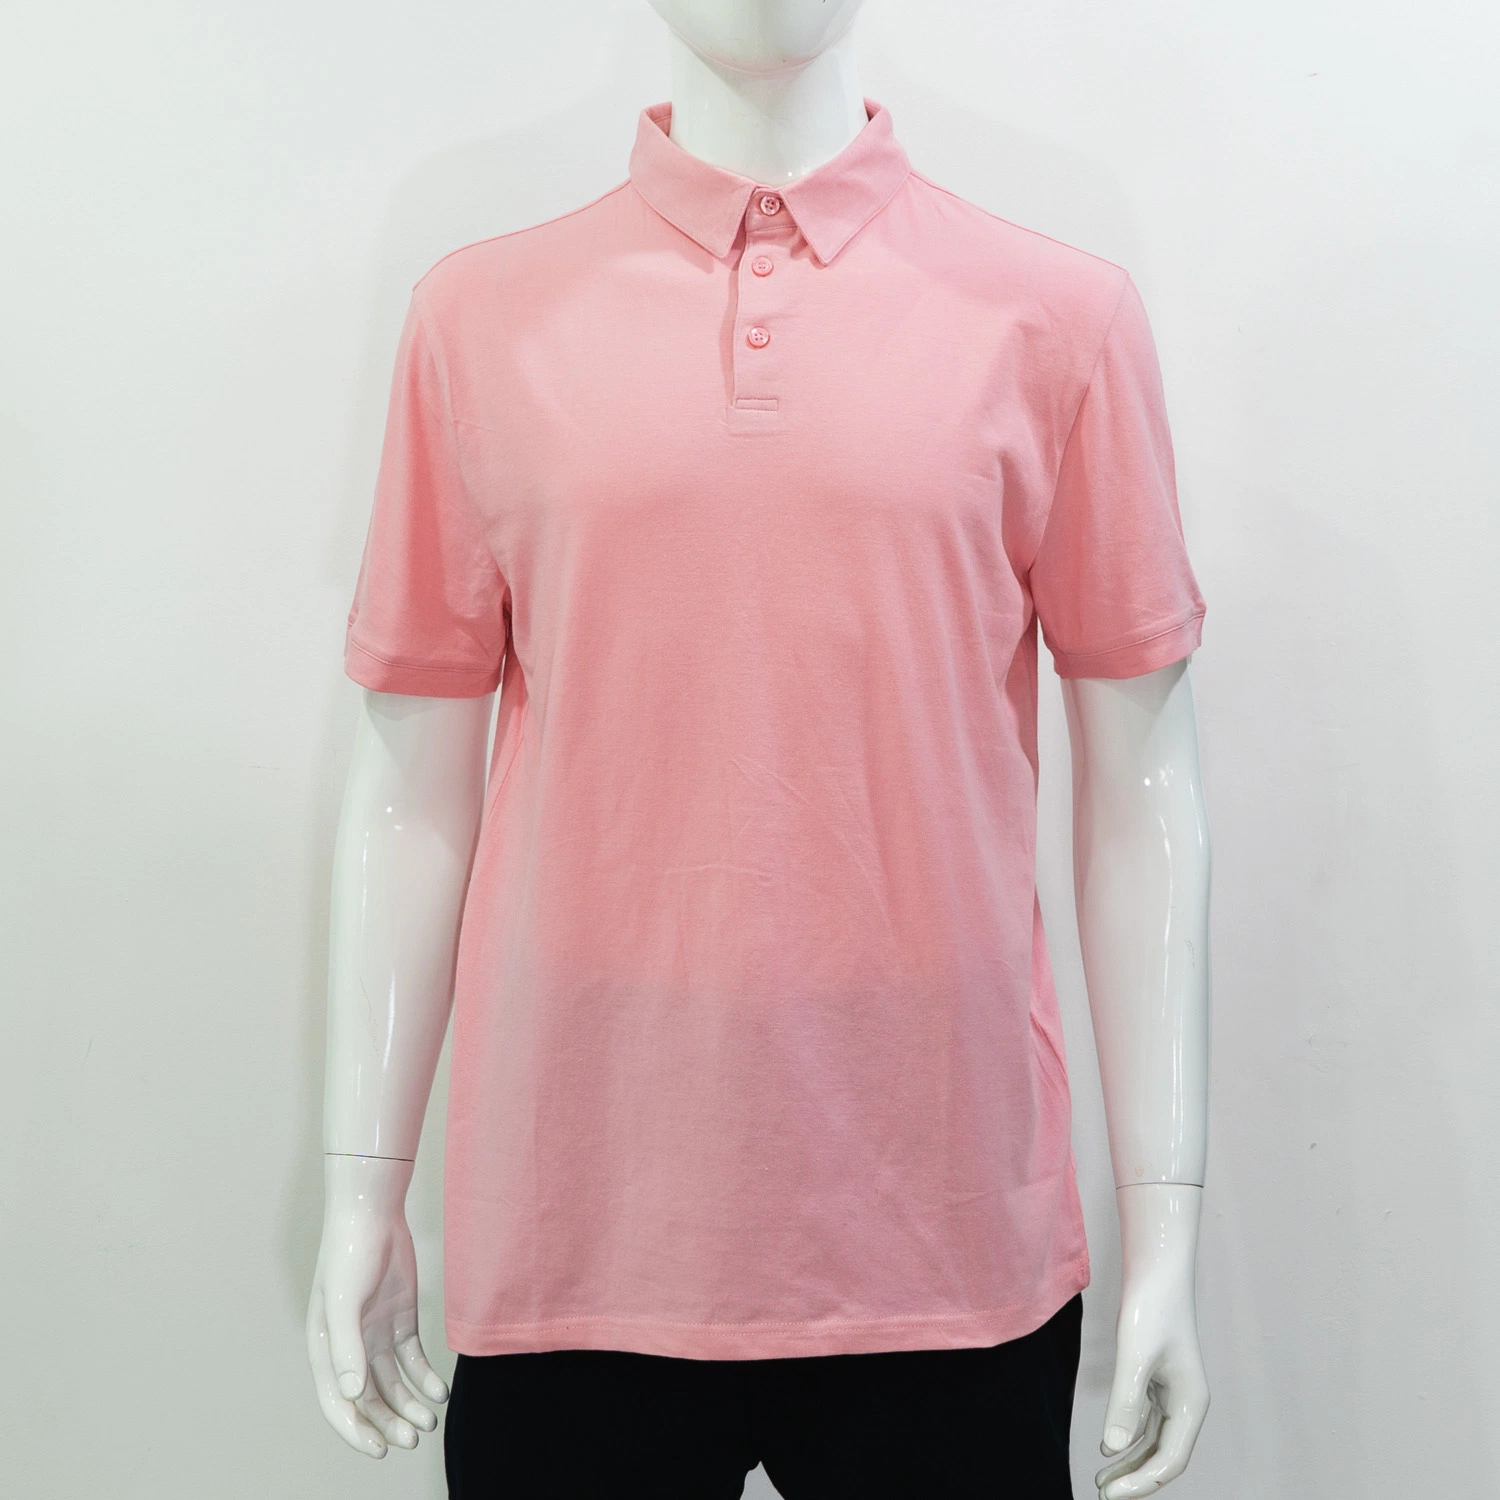 Rosa Basic T-Shirt Custom Stickerei Print Kurzarm Top Großhandel Shirt Hochwertige Bekleidung Herren Casual Cotton Polo